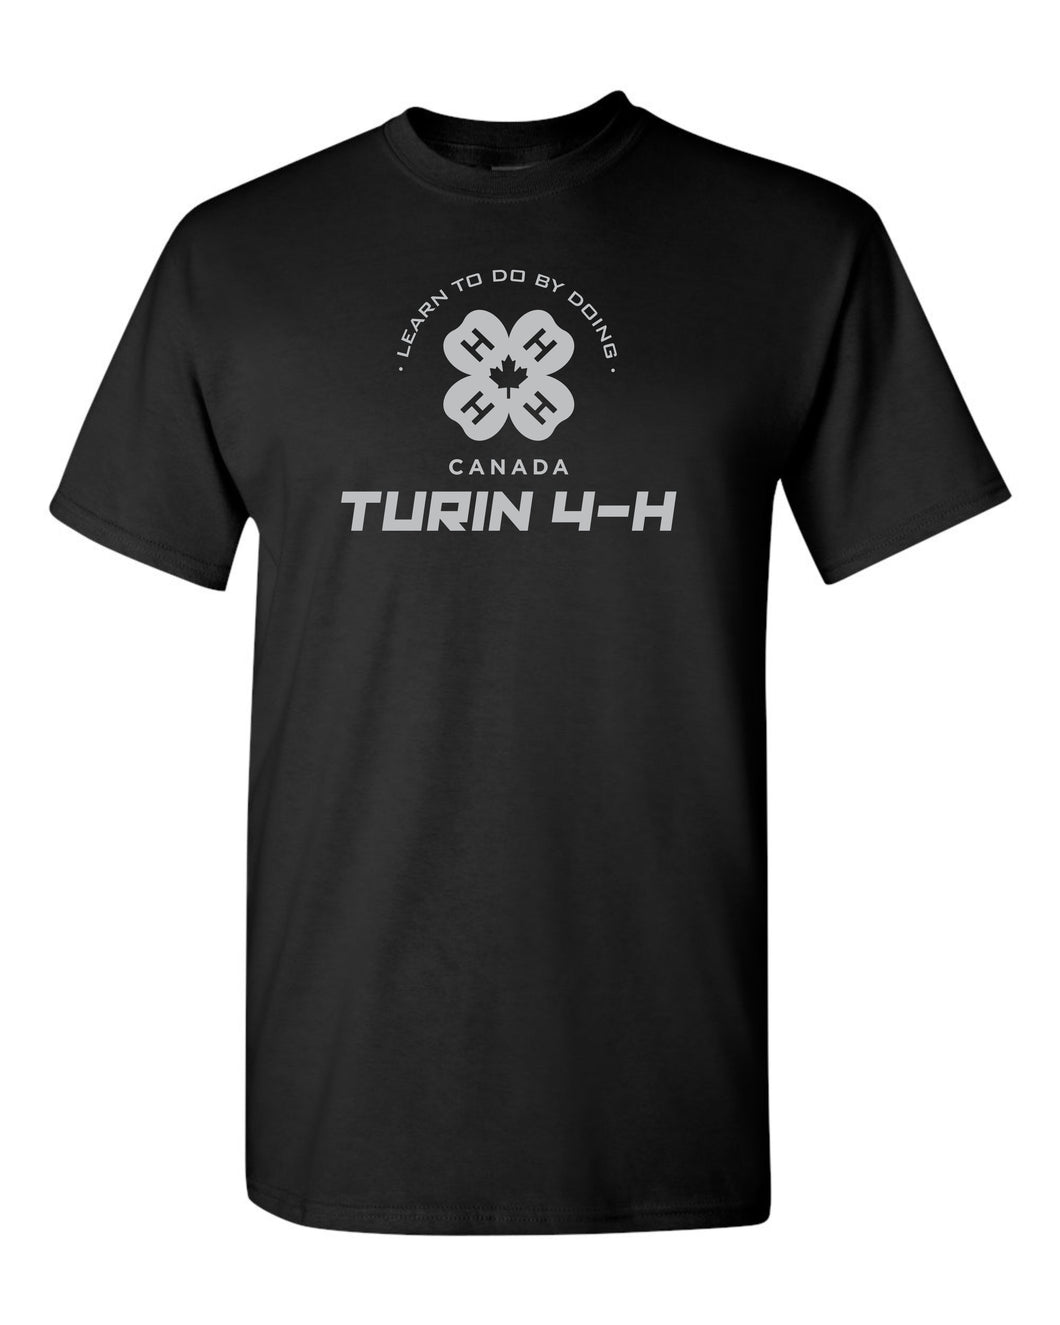 T-SHIRT - TURIN 4-H LOGO - ADULT